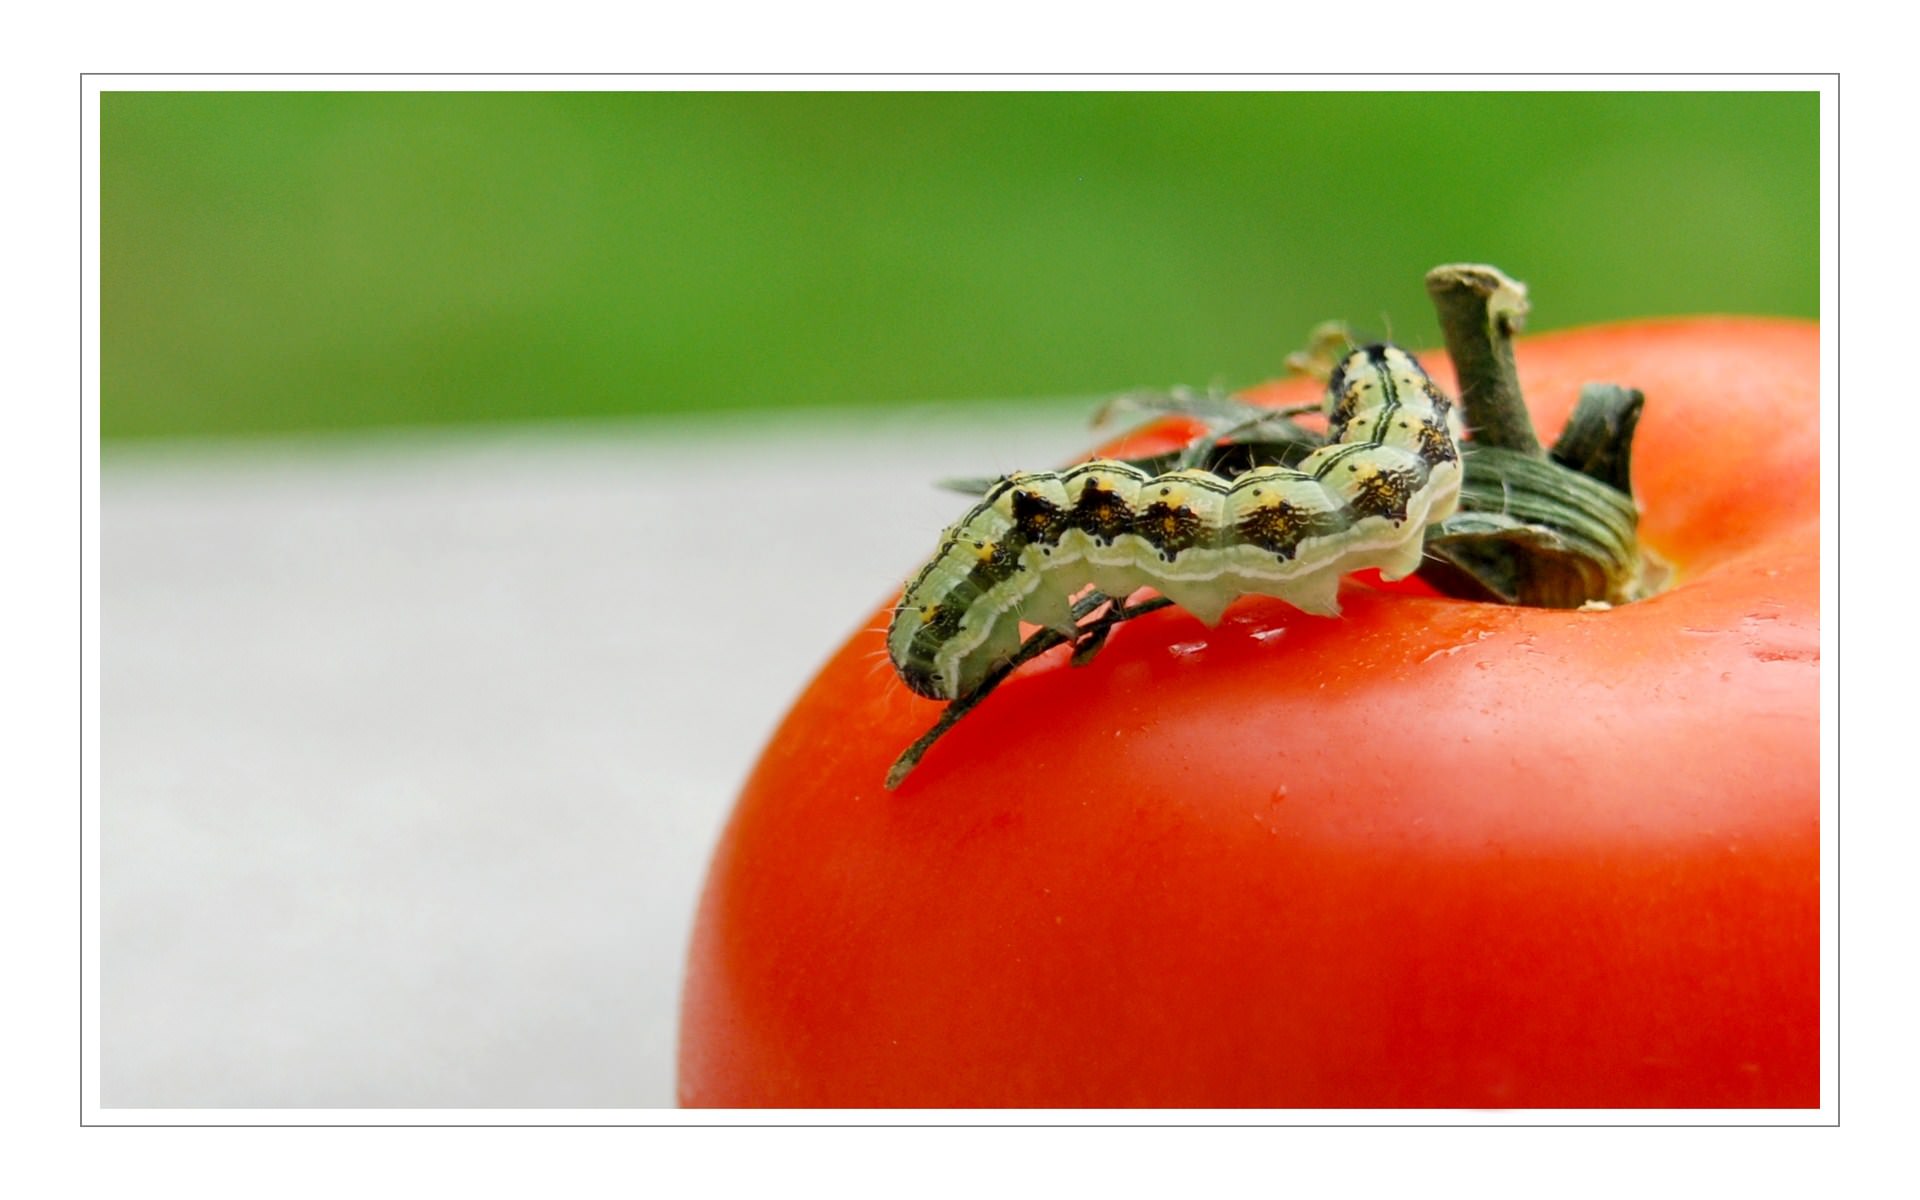 Chenilles La Chenille se promène sur une tomate